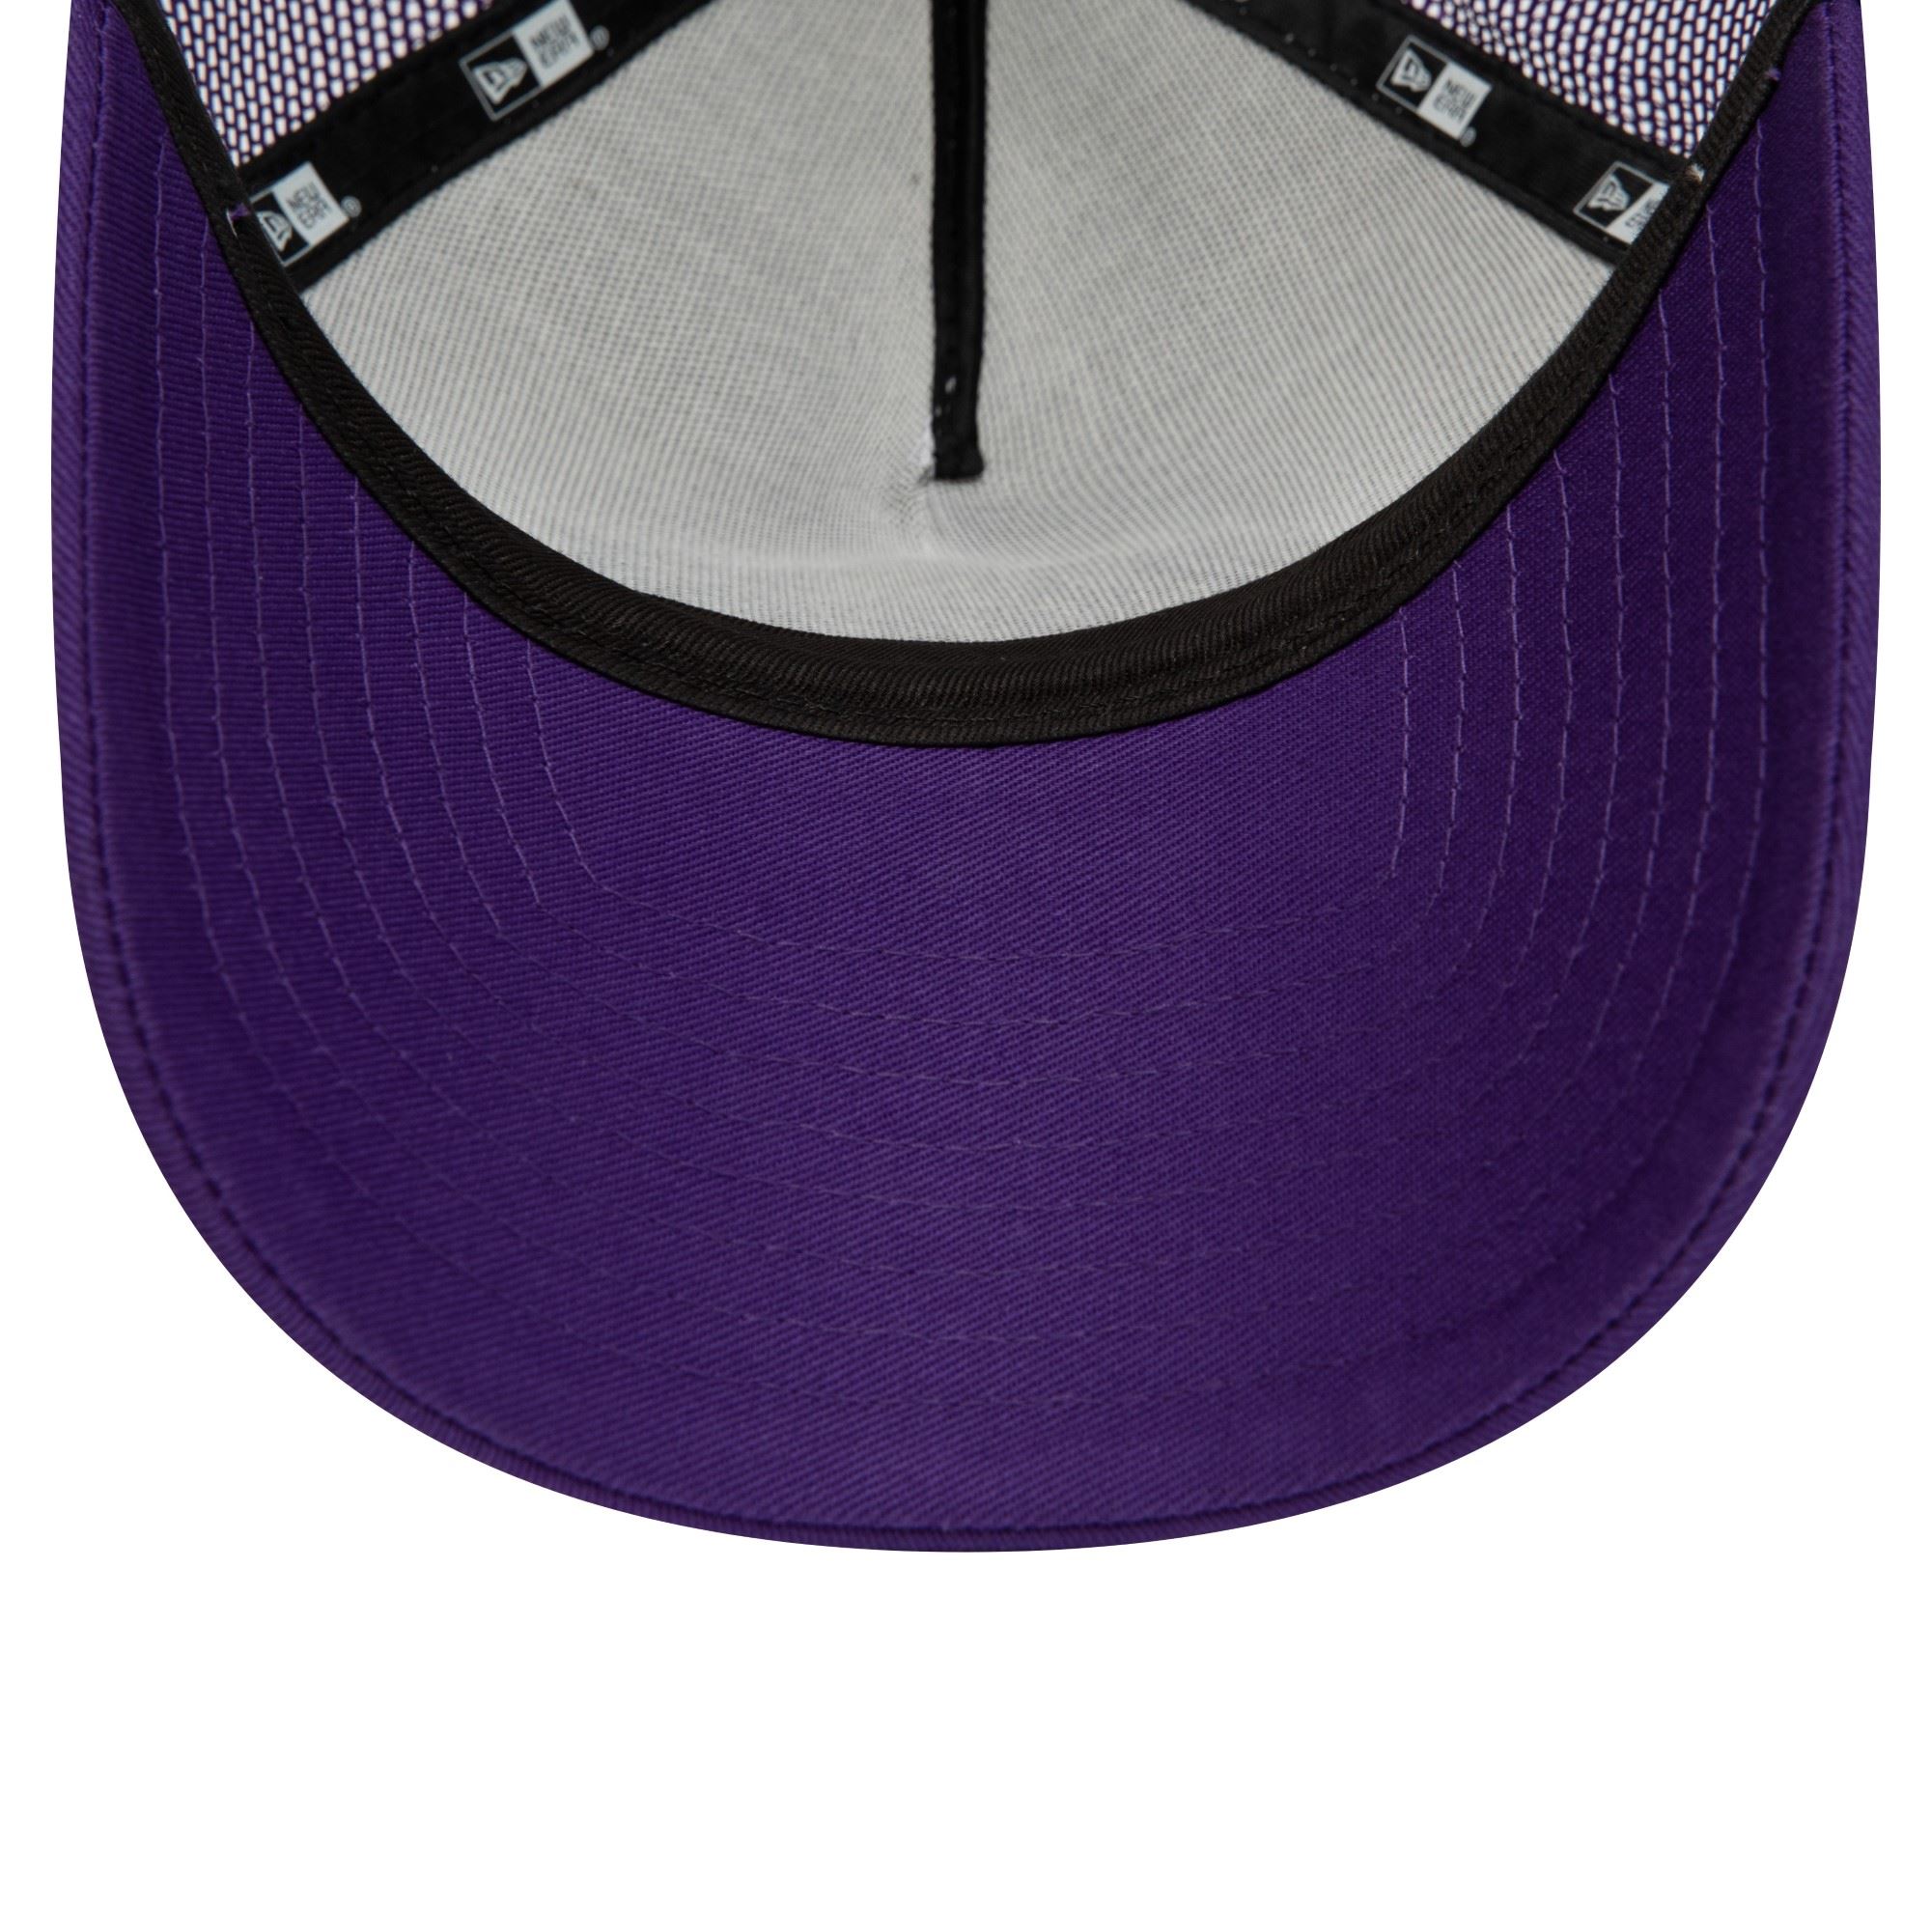 Los Angeles Lakers NBA Team Colour White Purple A-Frame Adjustable Trucker Cap New Era